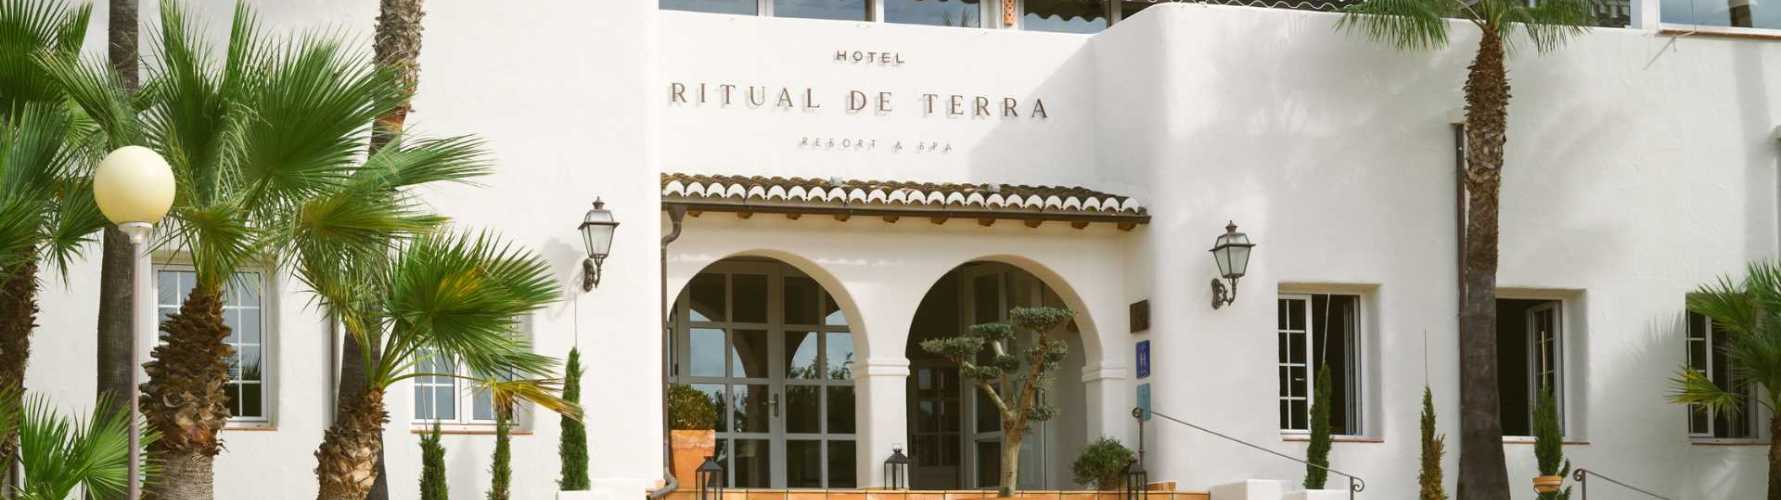 hotel ritual de terra